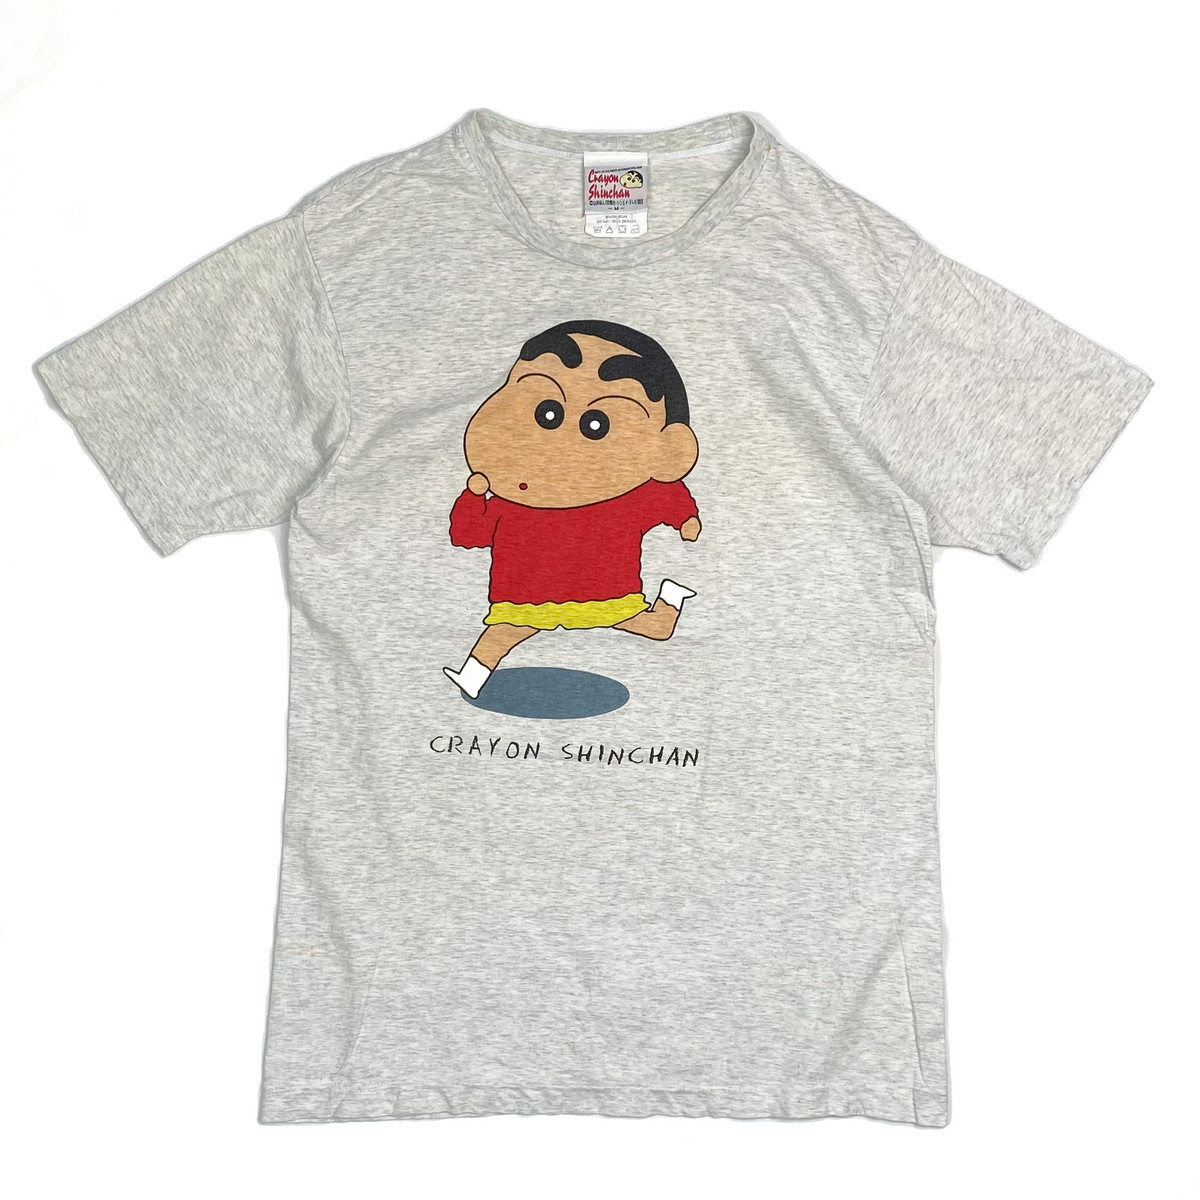 90 S Crayon Shin Chan Printed T Shirt クレヨンしんちゃん Tシャツ キャラクター 古着 漫画 アニメ 古着 Whiteheadeagle